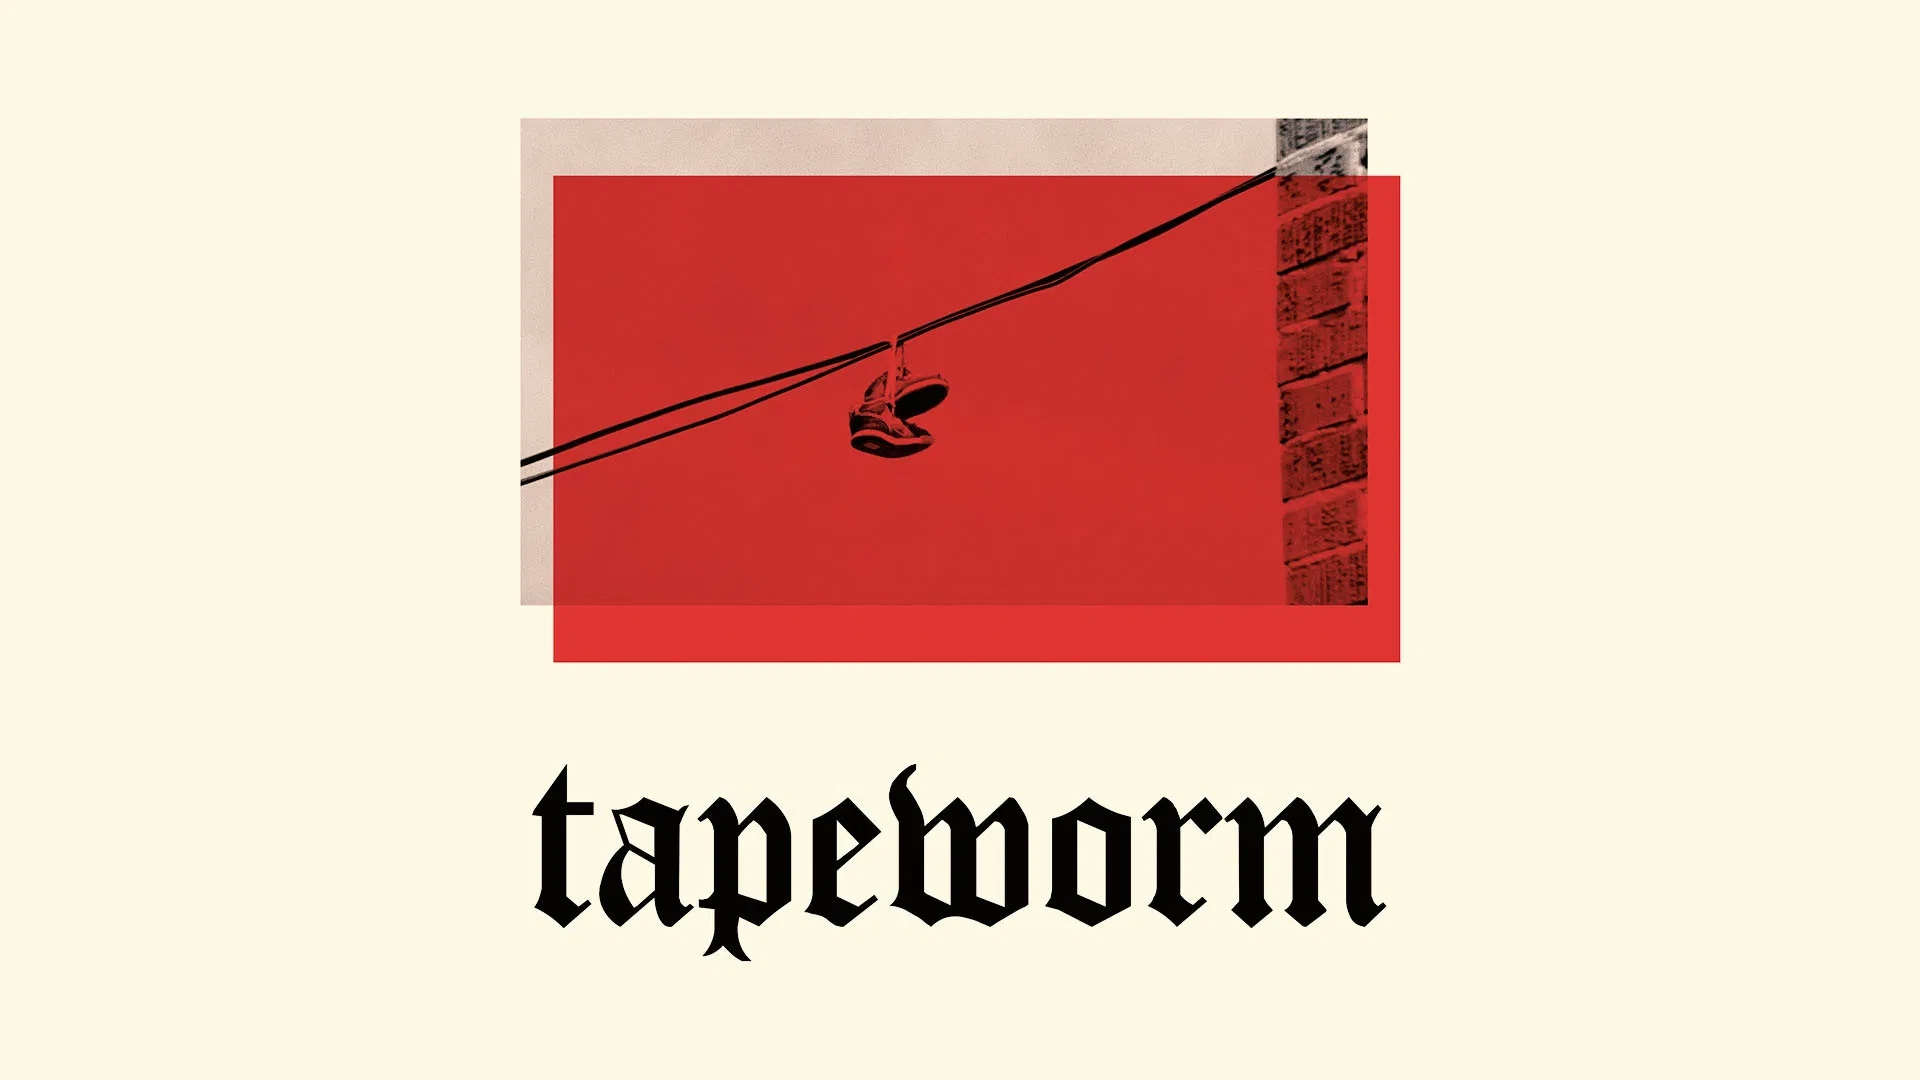 Tapeworm